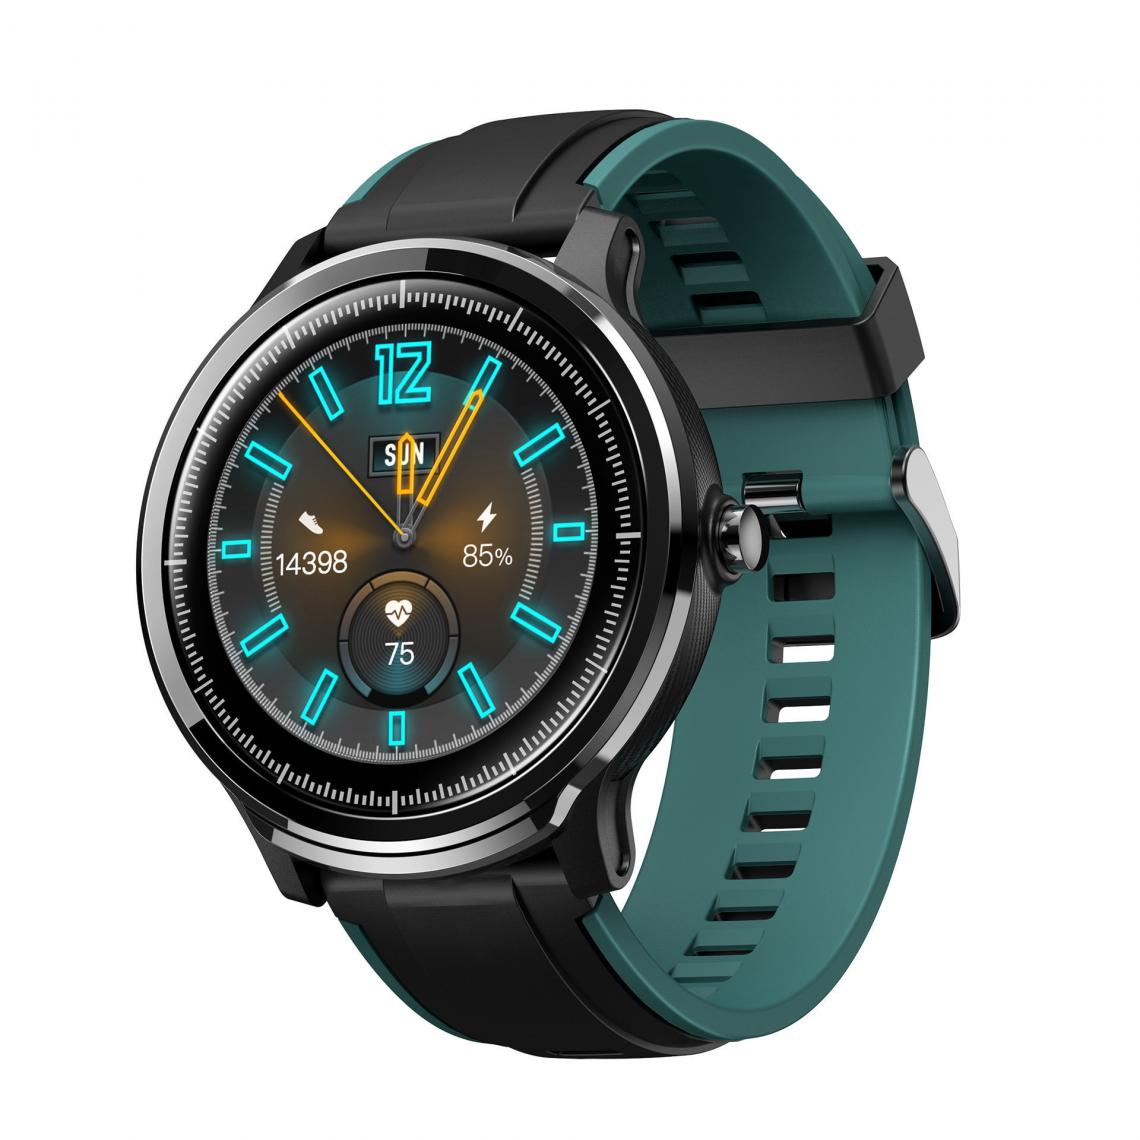 Chronotech Montres - Men's Smartwatch Sport Watch 1.3 inch 15 Days Battery Life GPS Sleep Tracker Heart Rate Monitor IP68 Waterproof 8 Sports Modes(Green) - Montre connectée